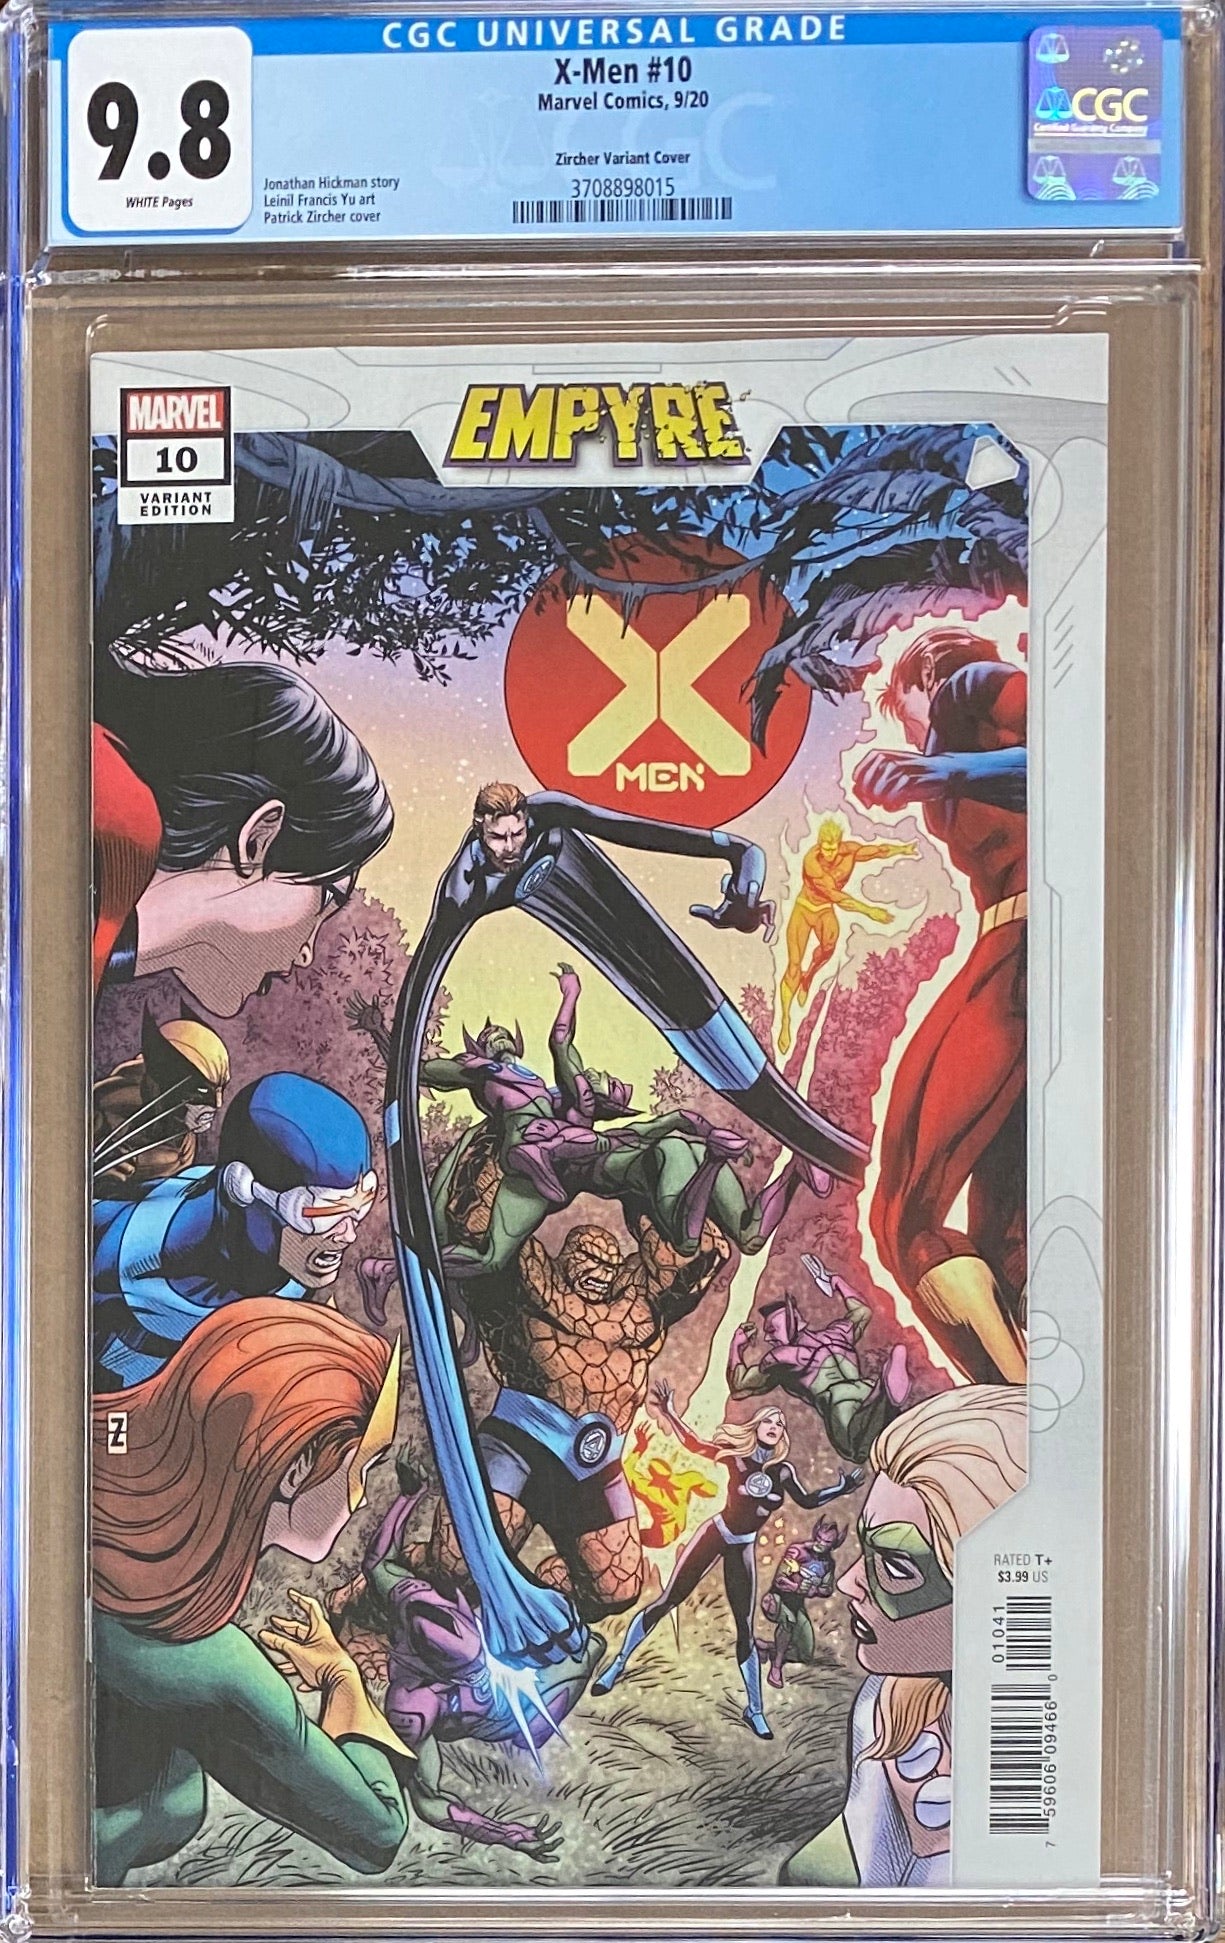 X-Men #10 Zircher "Confrontation" Variant CGC 9.8 - Empyre